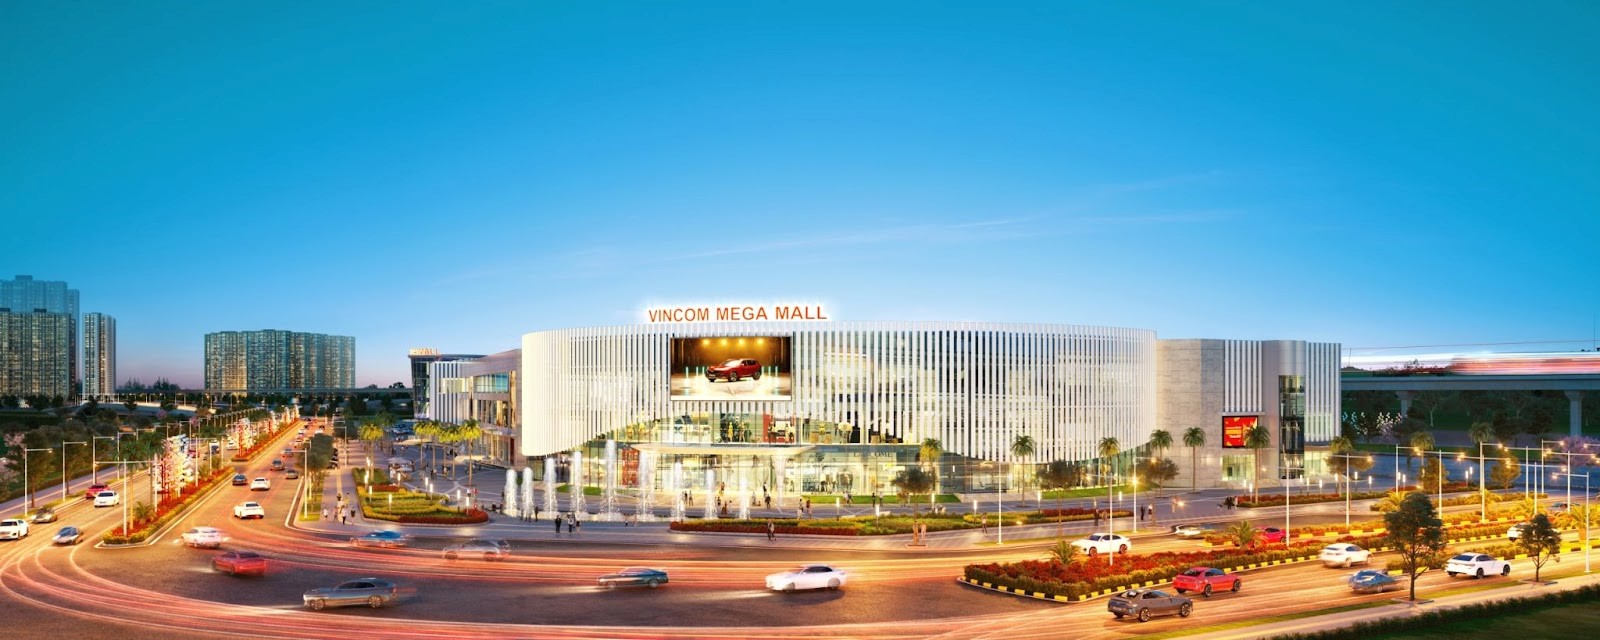 dua-ca-gia-dinh-den-vincom-mega-mall-smart-city-an-gi-thi-hop-ly-OneHousing-1